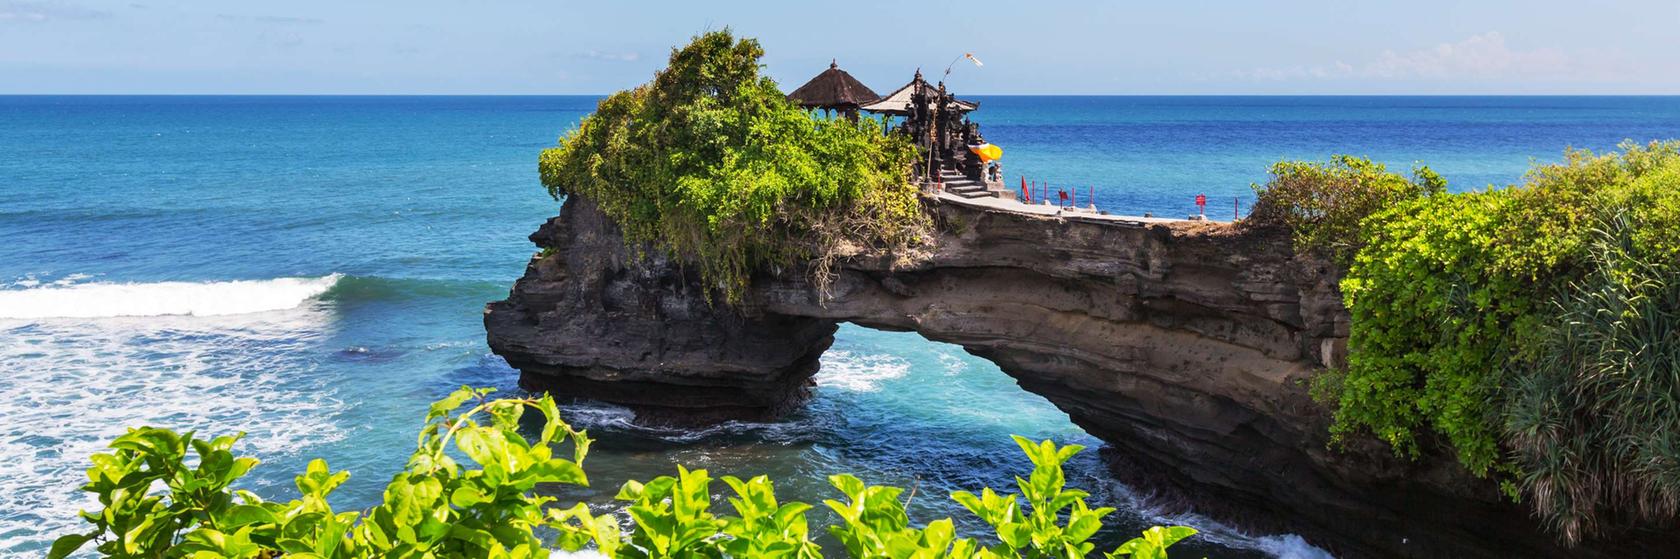 Nákupy a gastronomie na Bali